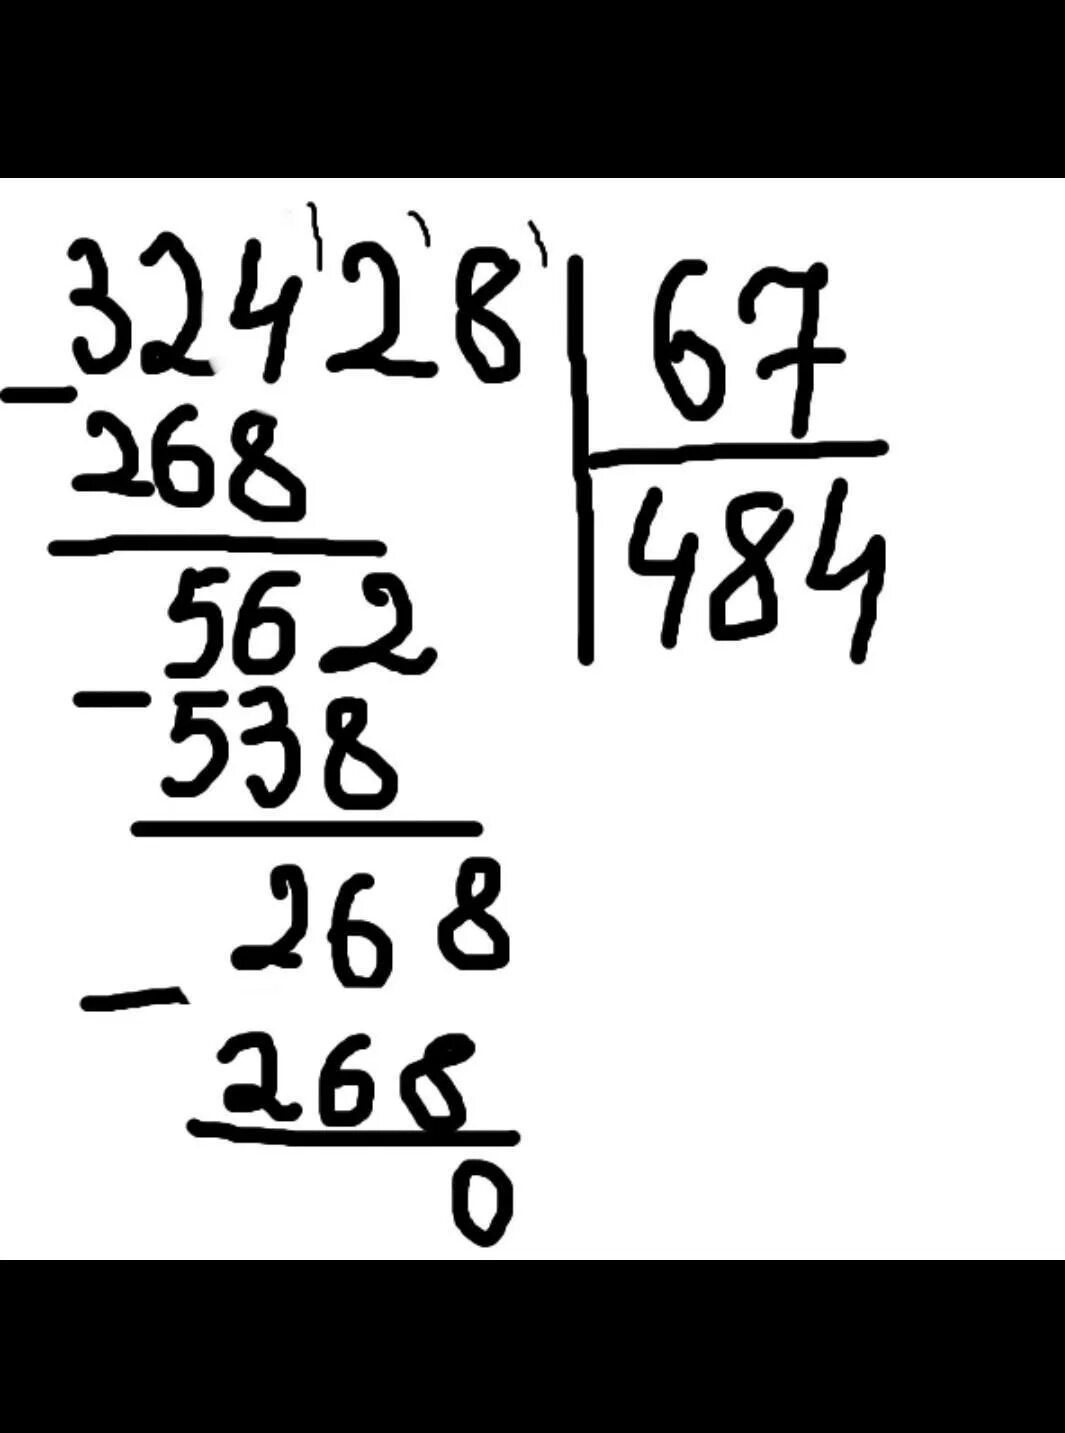 8820 разделить на 28. 20944 Разделить на 56 столбиком. 32428 67 Столбиком. 32428 Разделить на 67 столбиком. 20944:56 Решение в столбик.